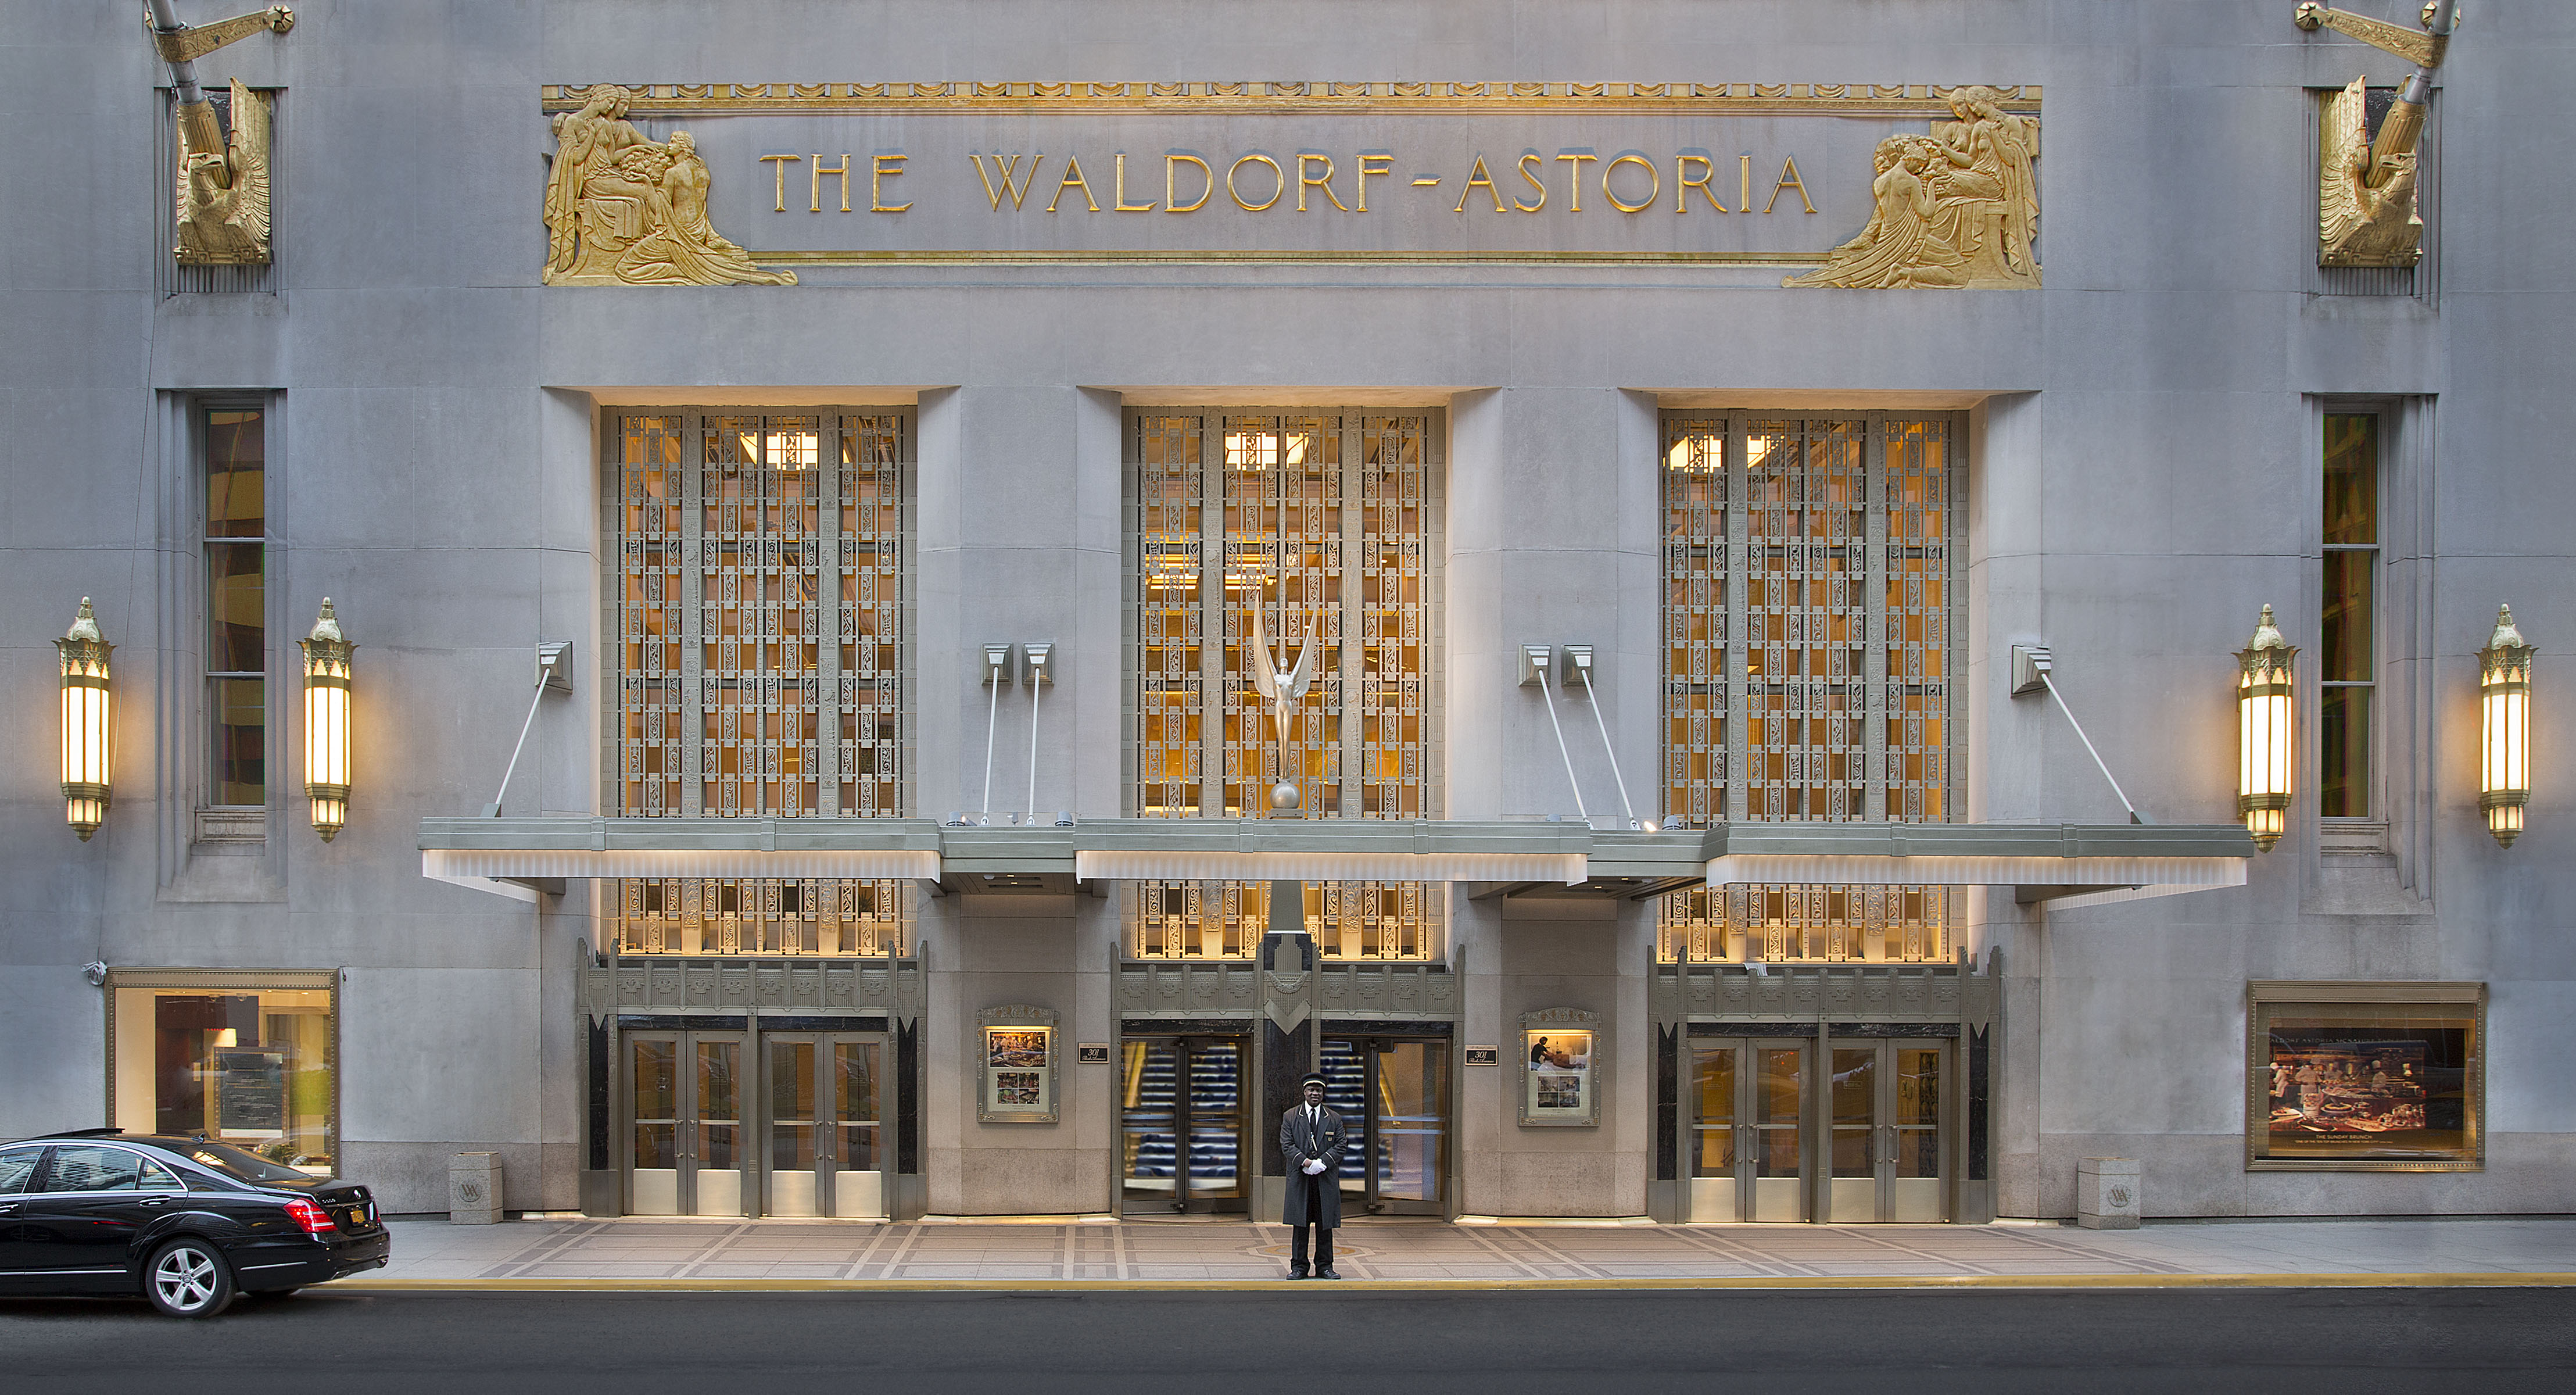 Waldorf Astoria Park Avenue Entrance- Image Source Curbed, www.crowdink.com